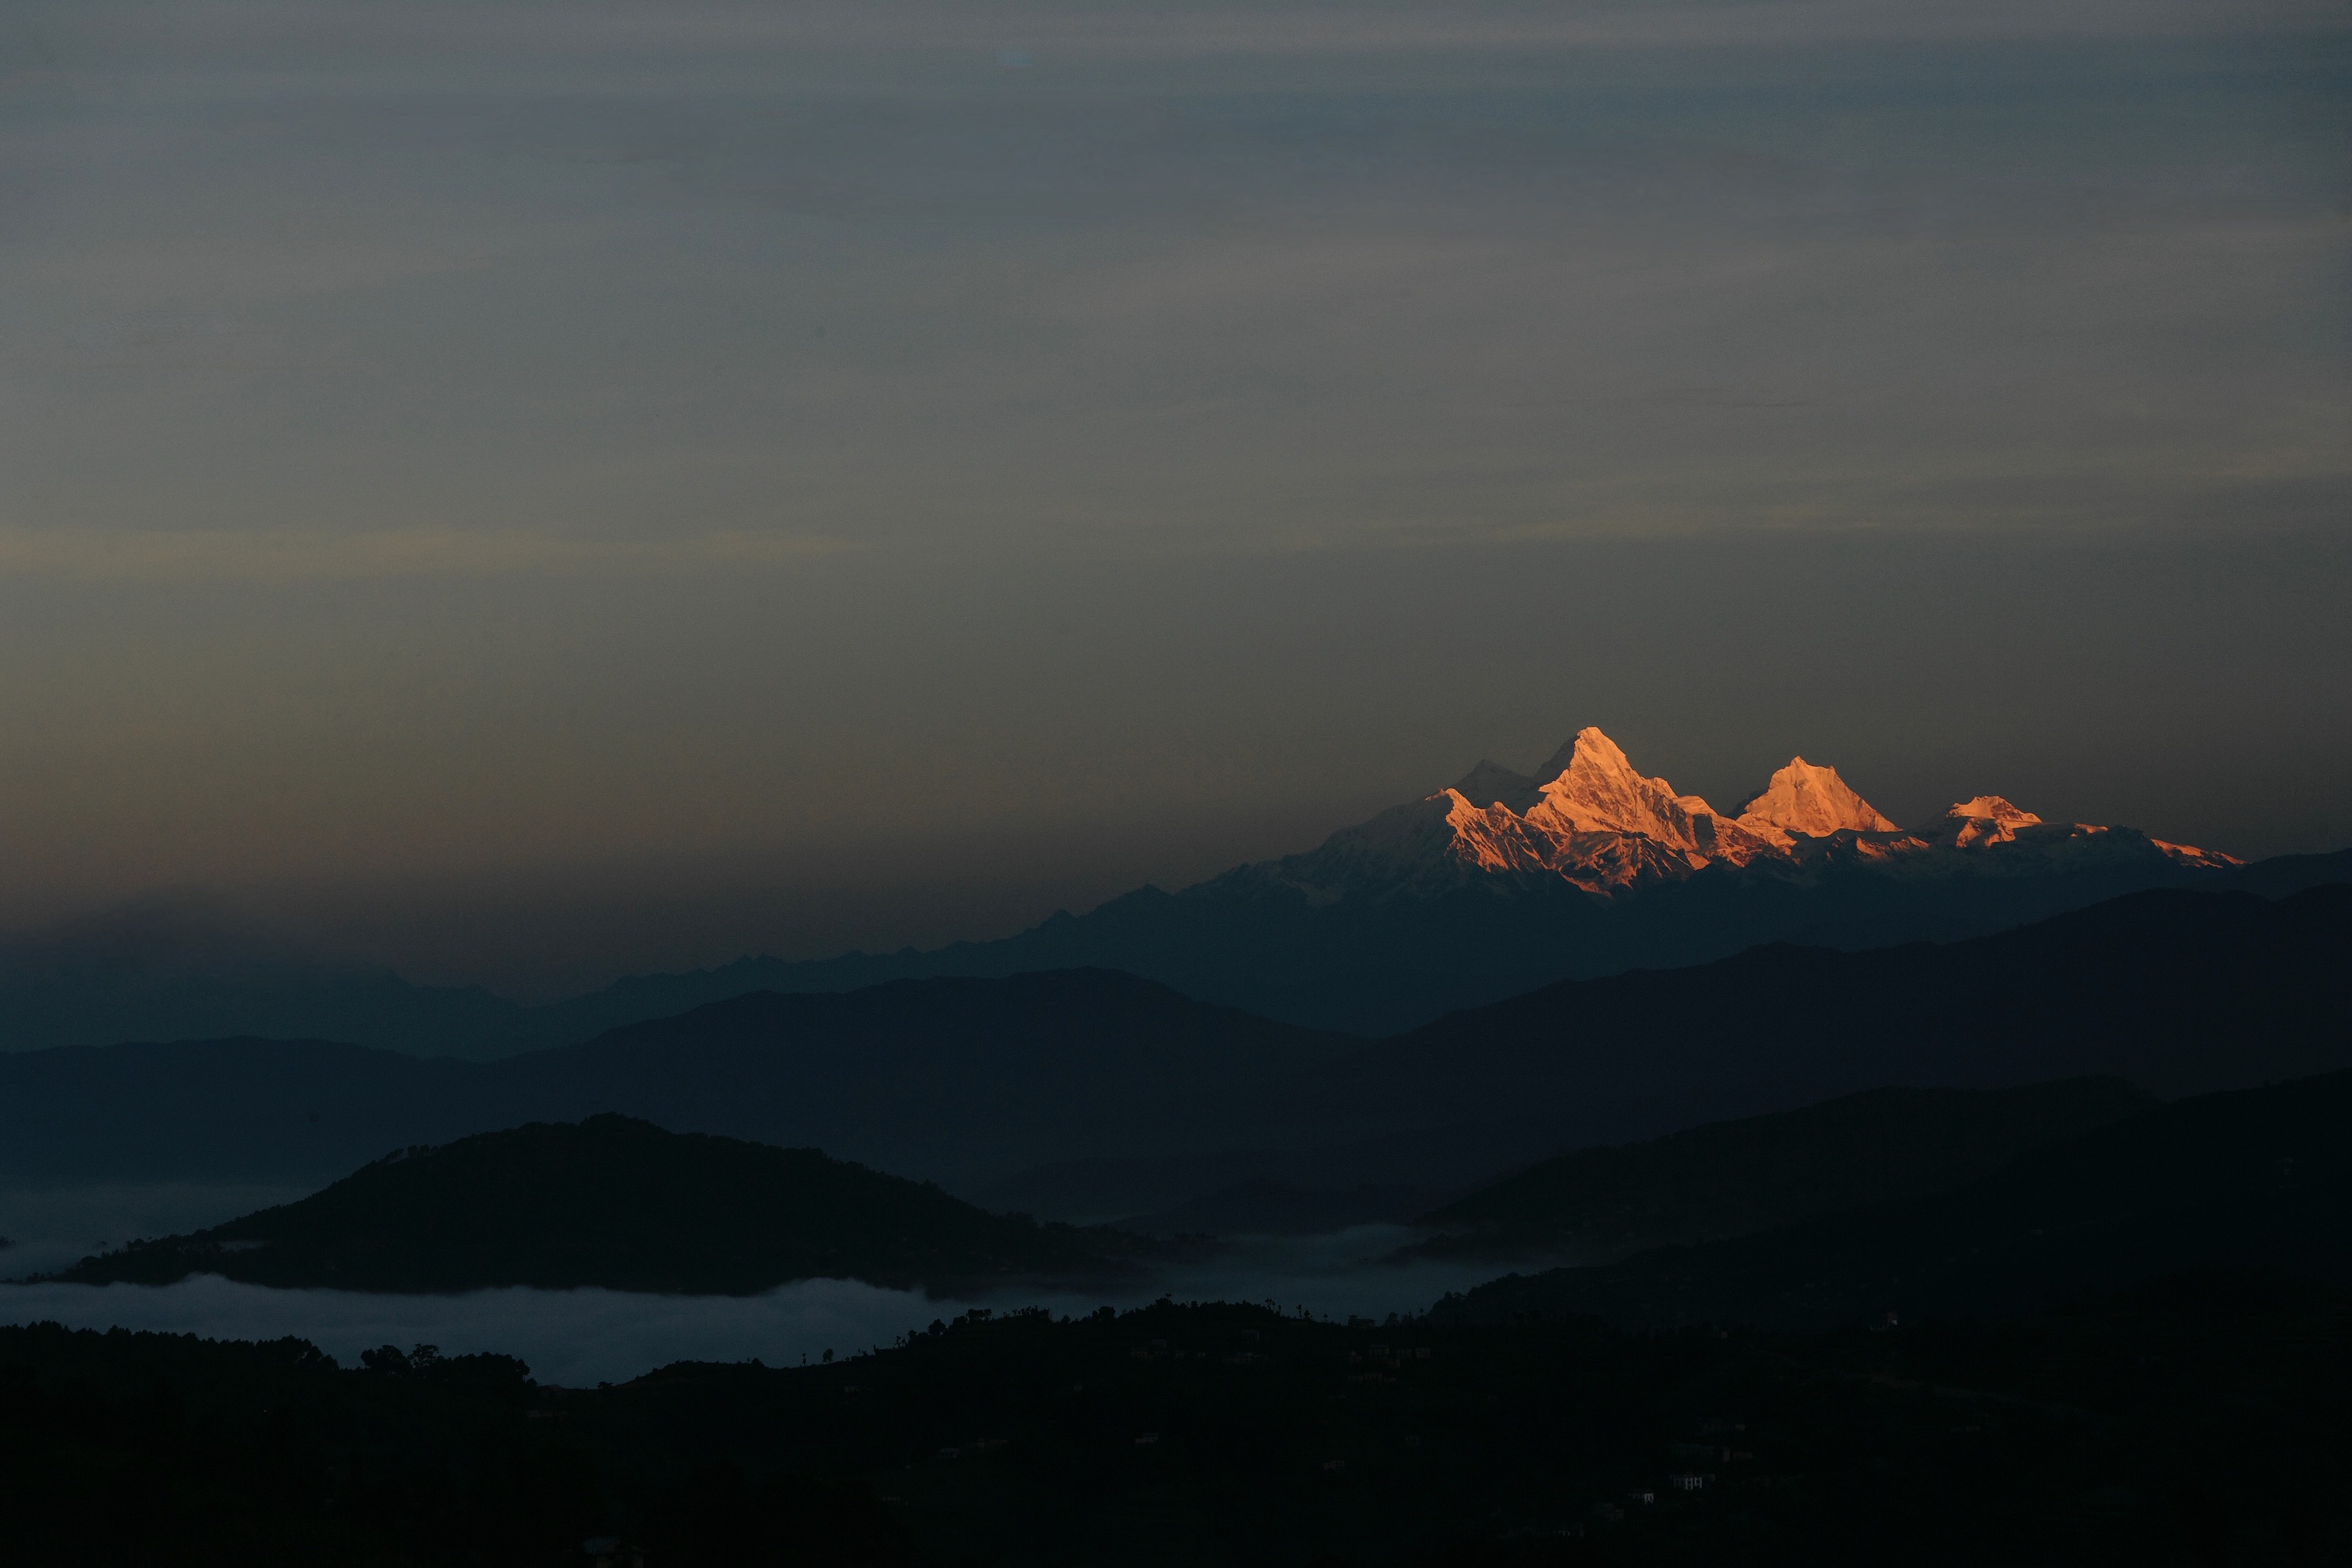 Manaslu au lever du soleil, vu de Namo Buddha, dans l’Himalaya, 2004. Photo : Matthieu Ricard.